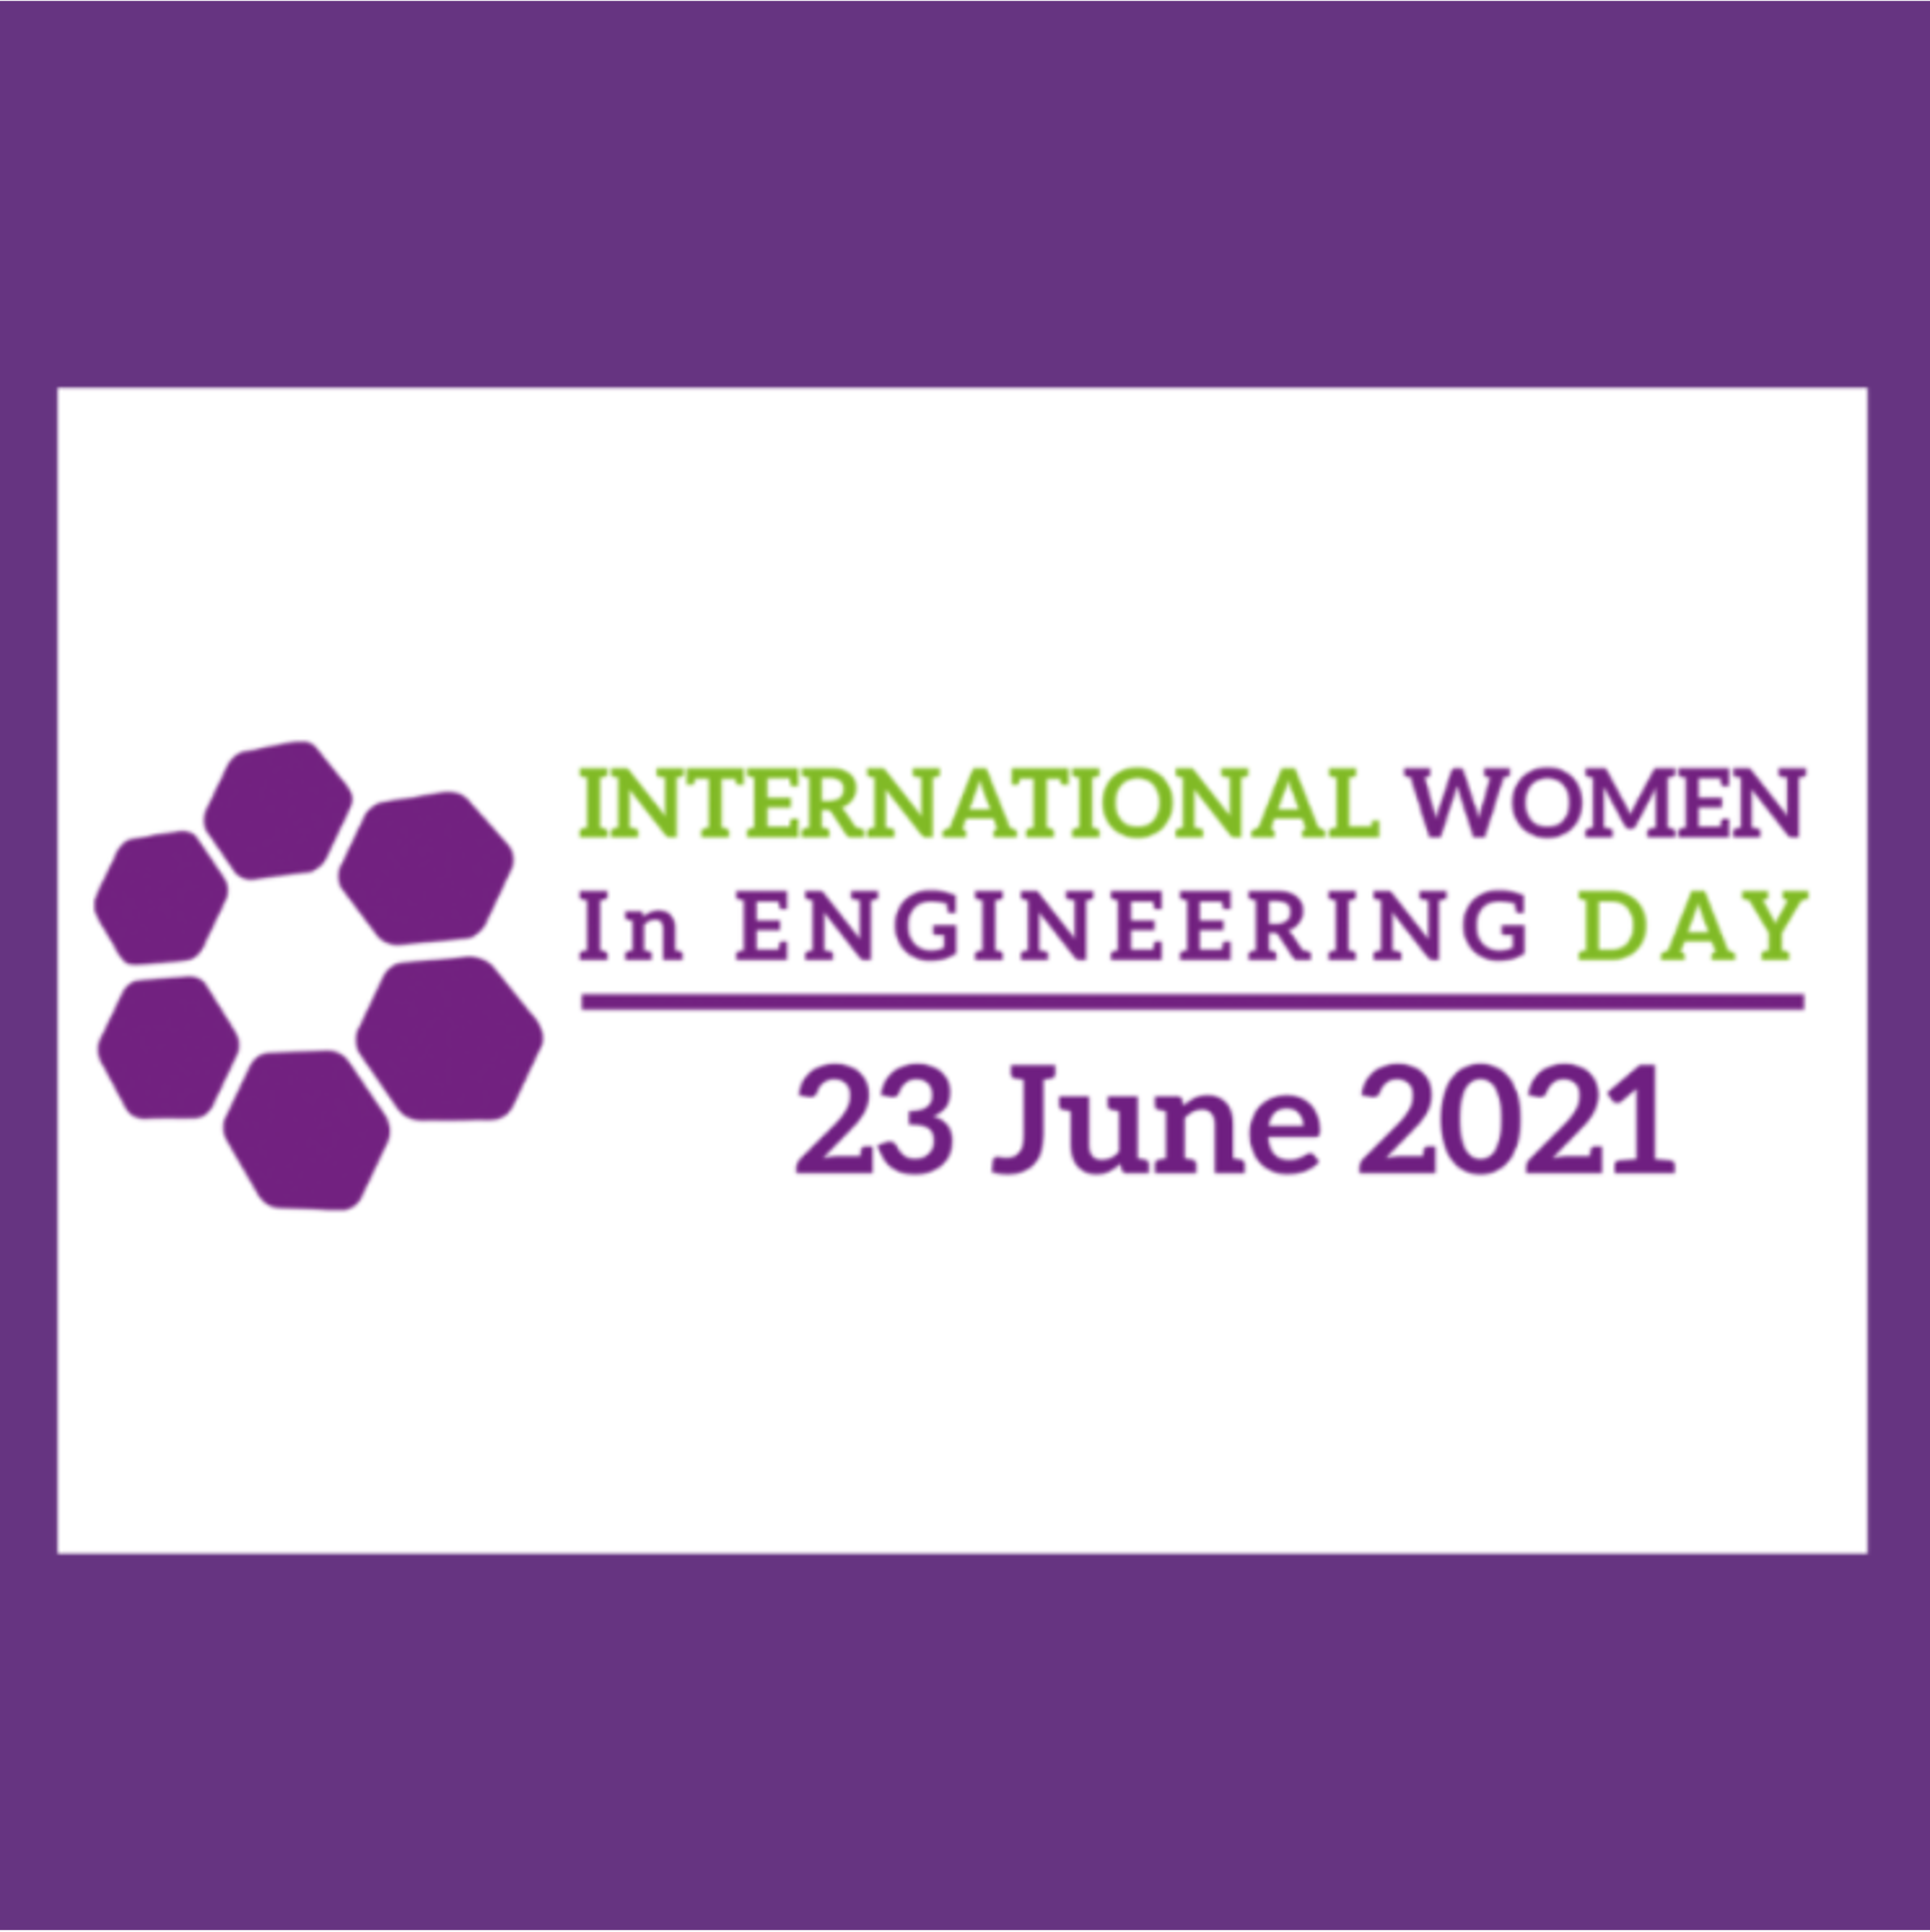 We celebrate our female engineers on International Women in Engineering Day